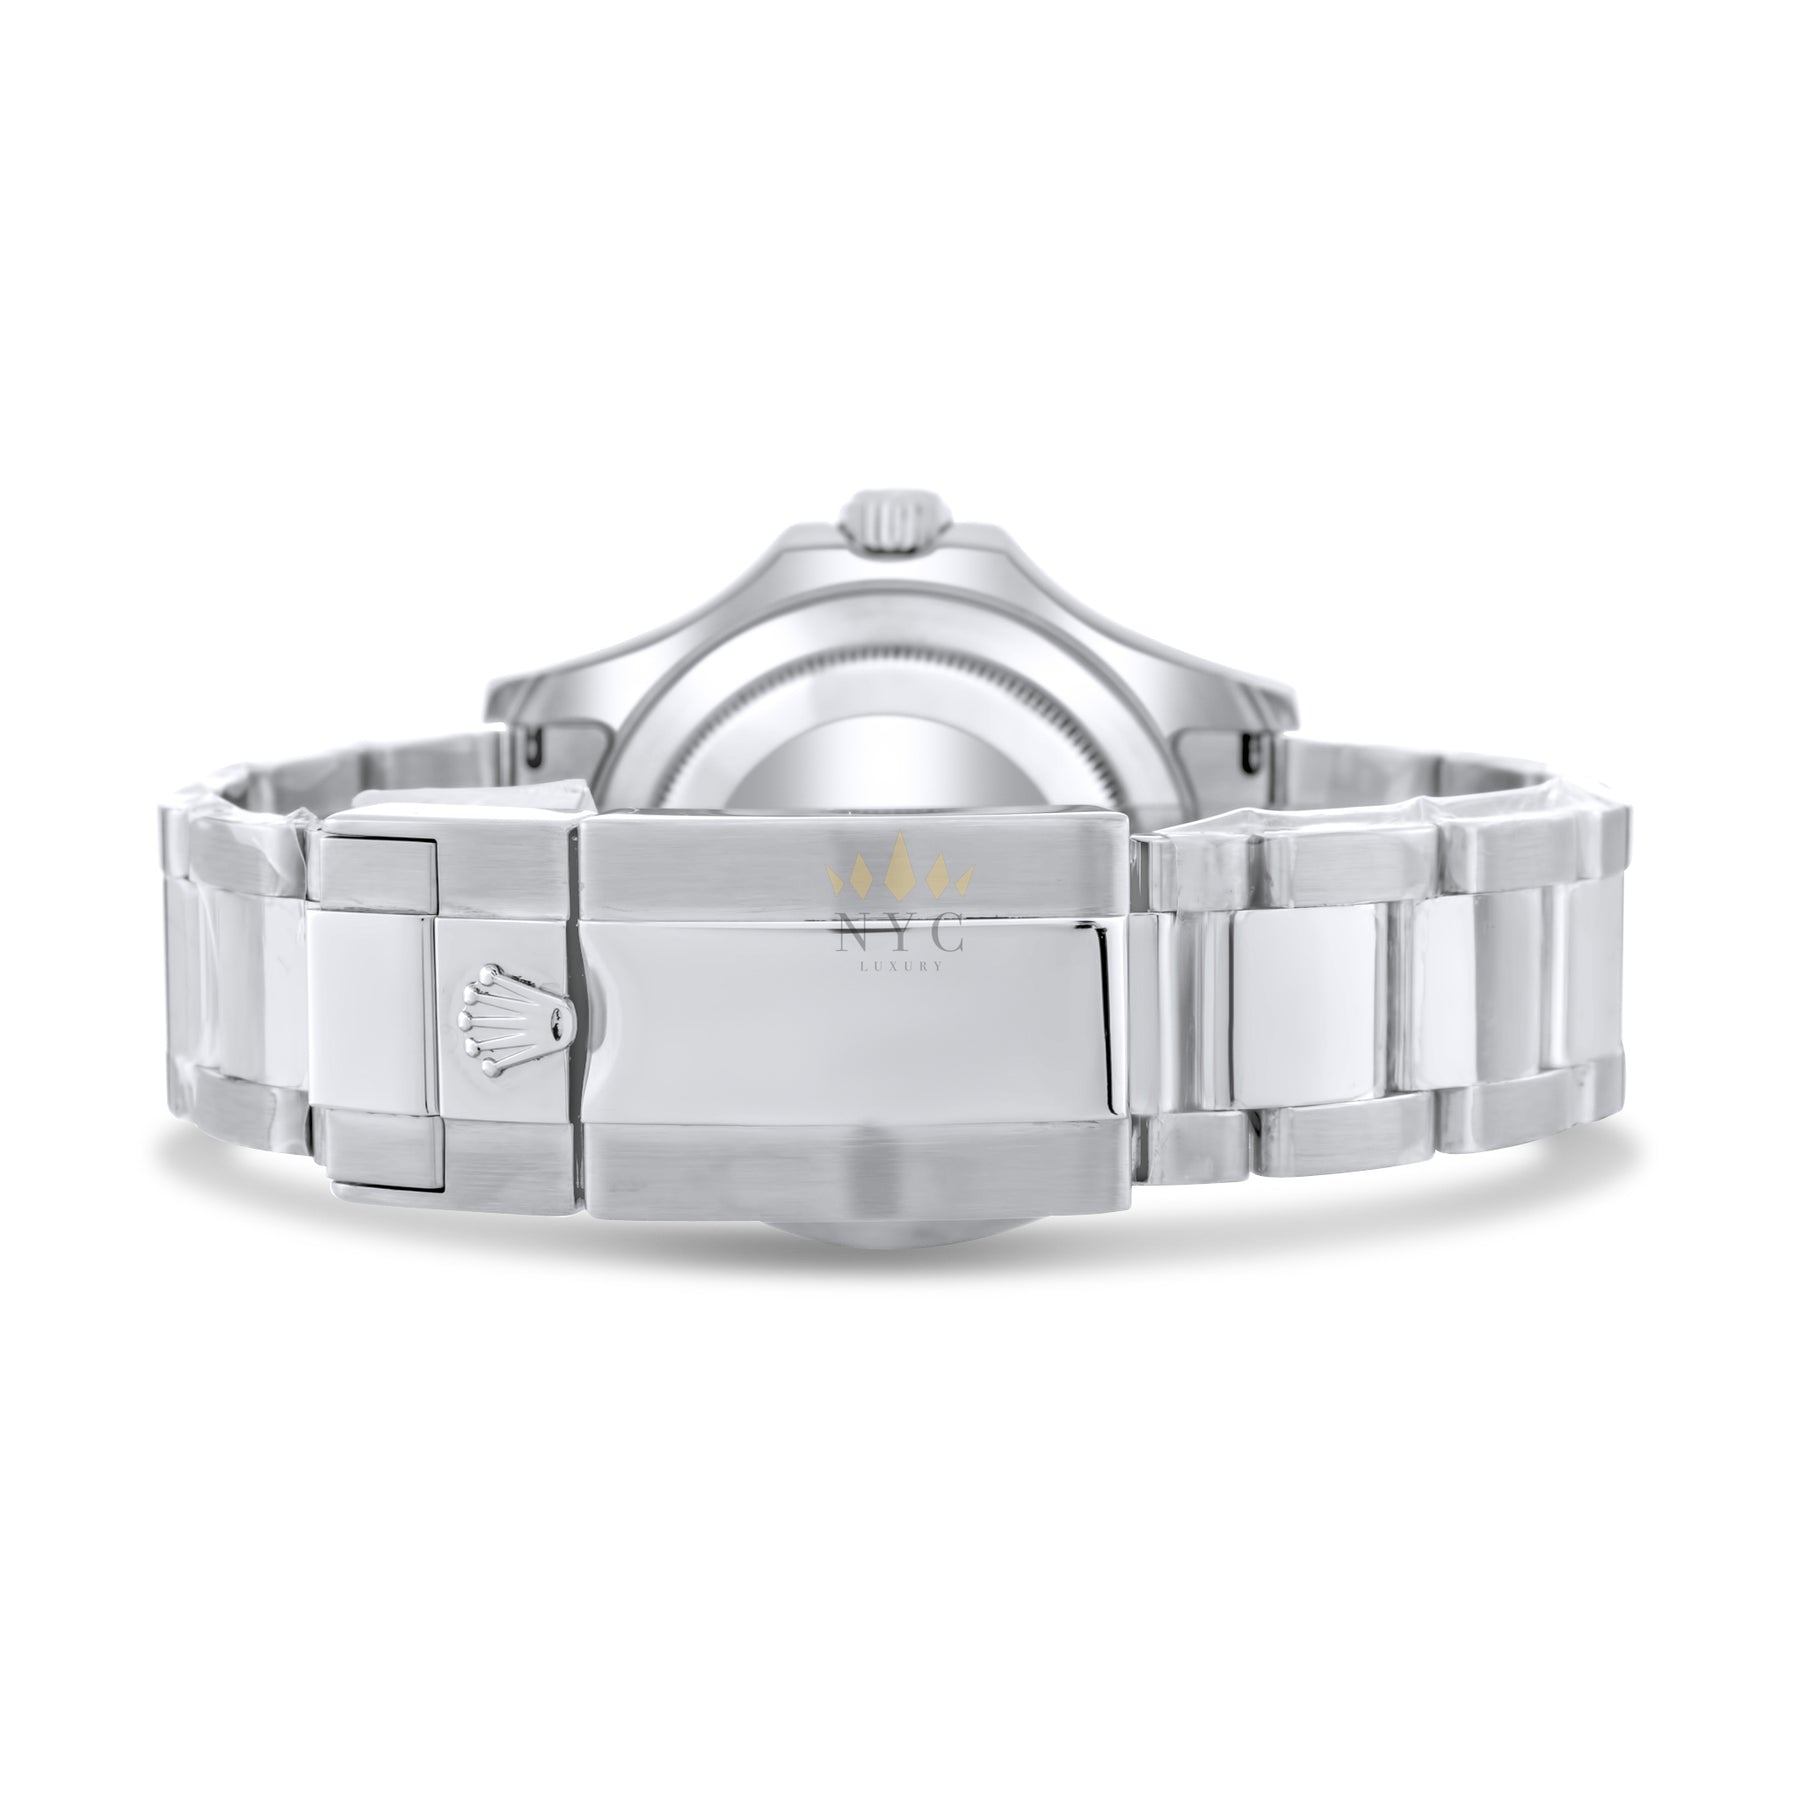 Rolex Yacht-Master 40MM Platinum Bezel/Blue Dial Stainless Steel Watch